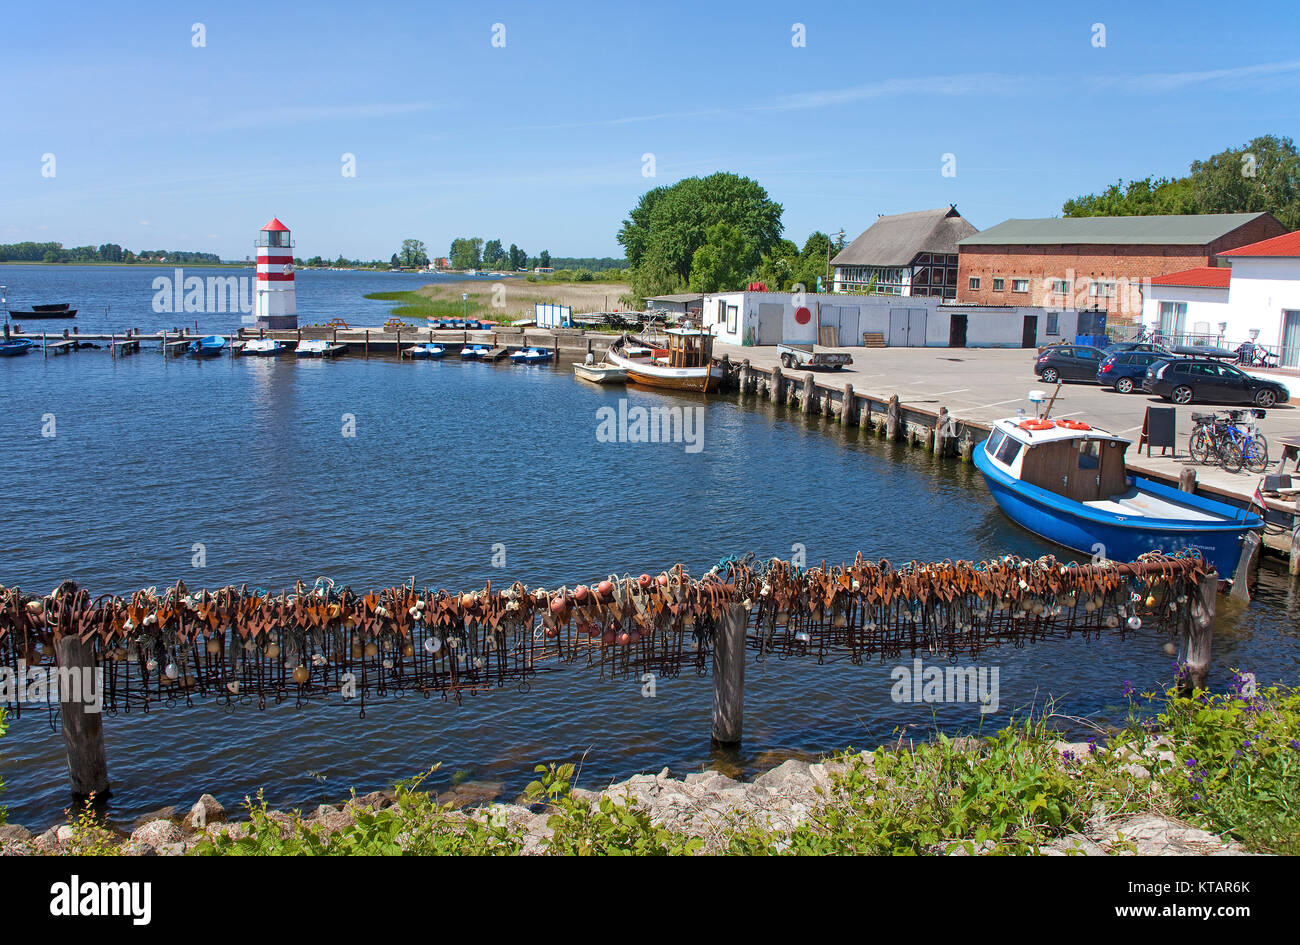 Rusty anchors at harbour of fishing village Waase, Ummanz island, National park Vorpommersche Boddenlandschaft, Ruegen island, Baltic sea, Germany Stock Photo